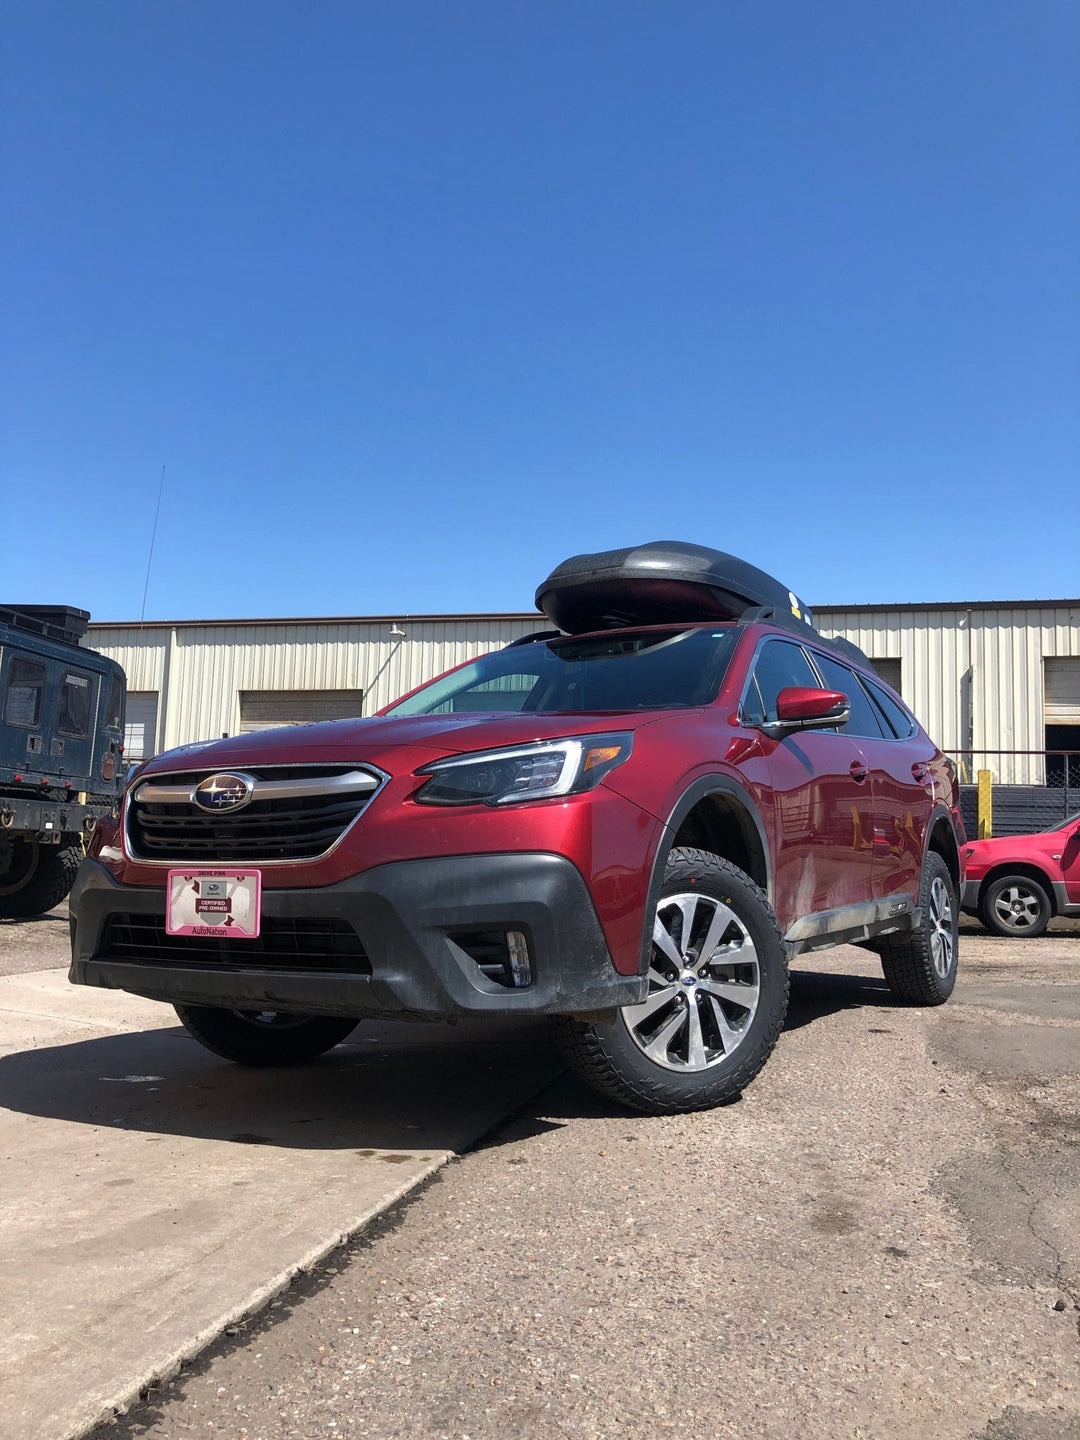 Subaru Outback Suspension Lift and Tires - Juggernaut USA